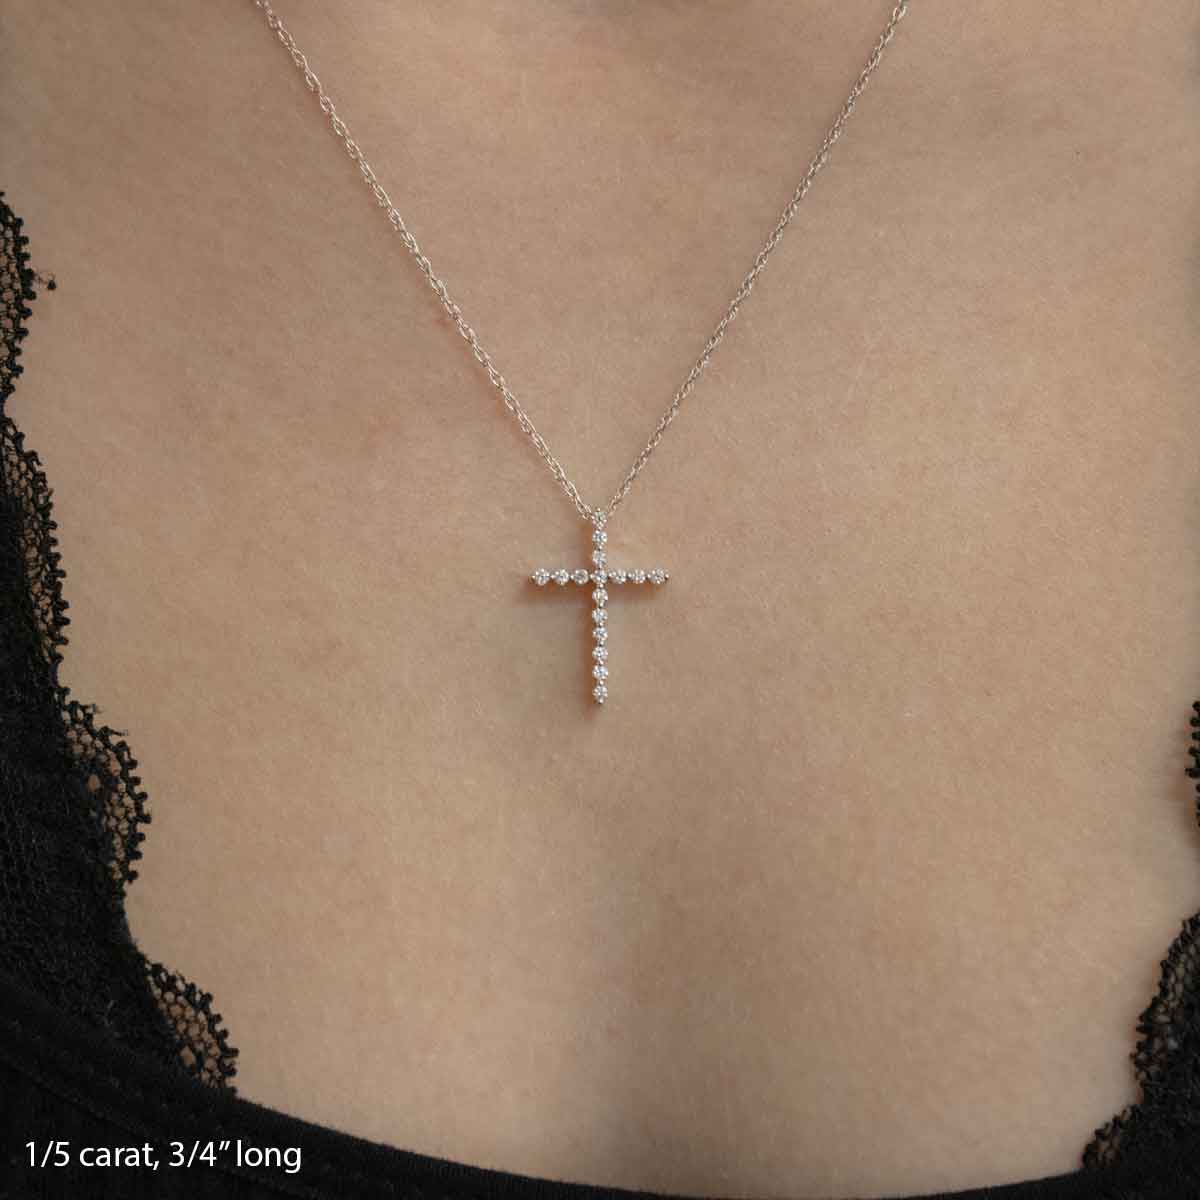 Lana Triple Cross Necklace in 14K Gold - Bergdorf Goodman